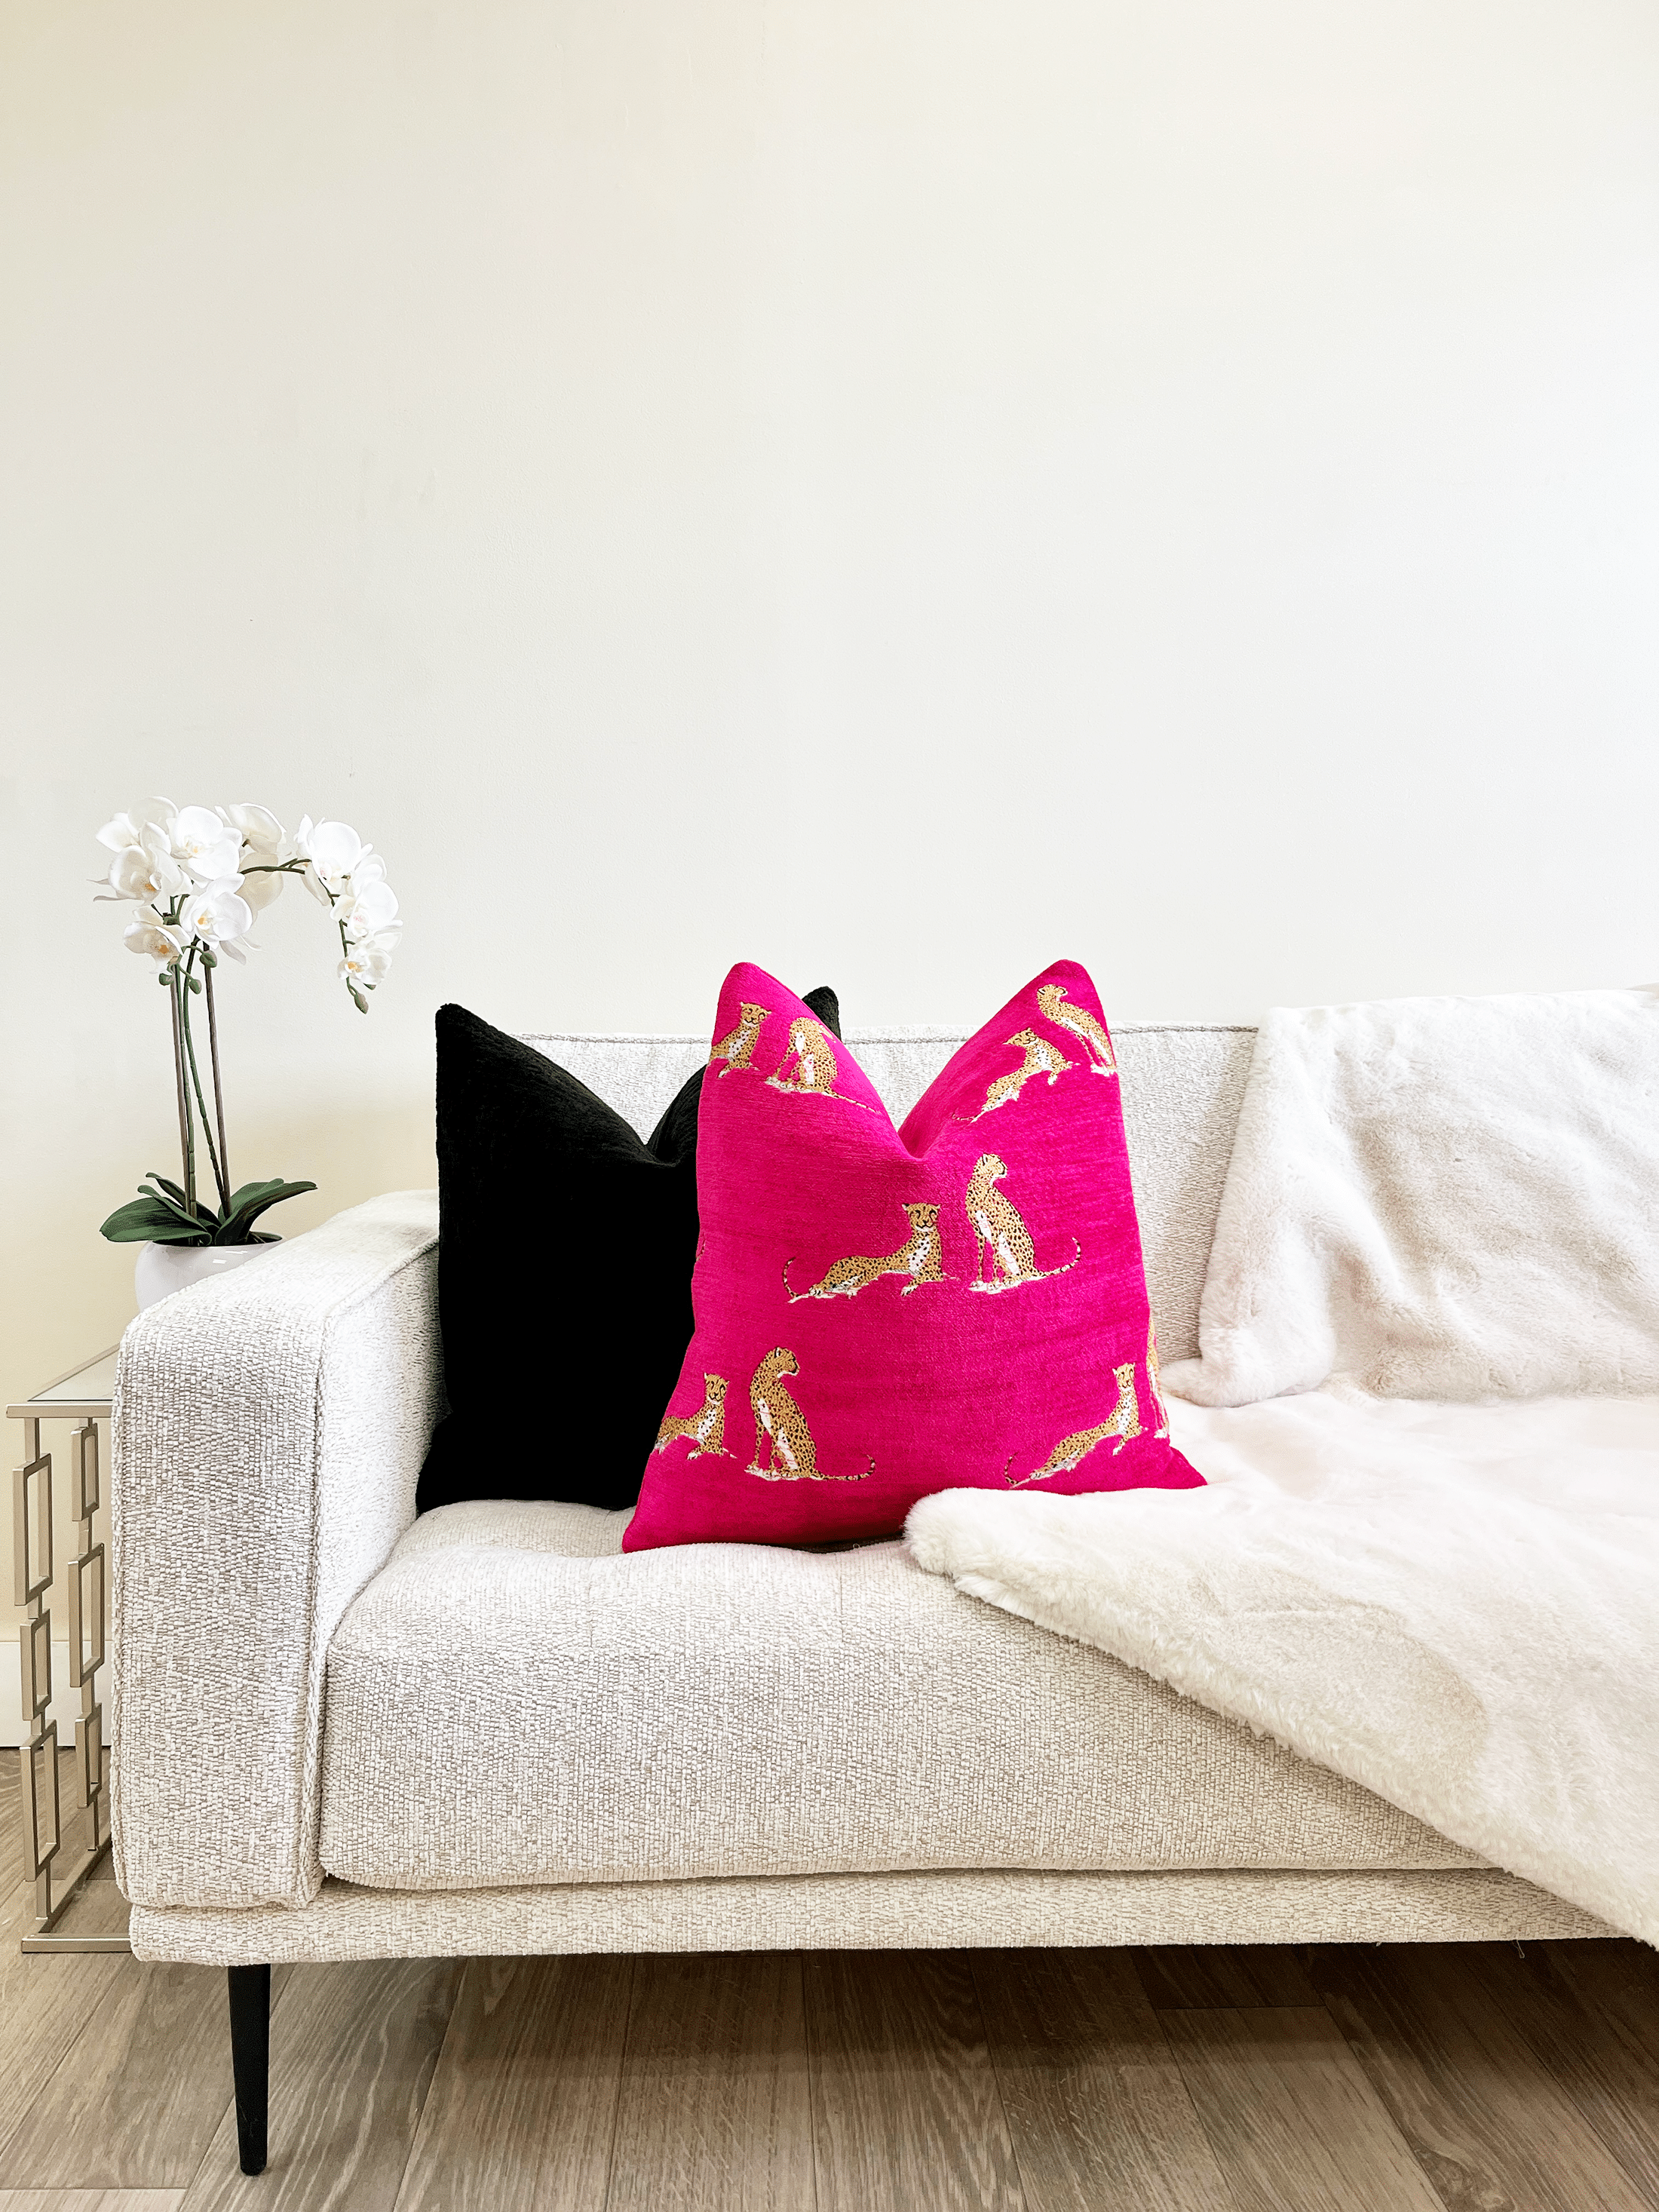 Fuchsia Embroidered Cheetah Throw Pillow Cover